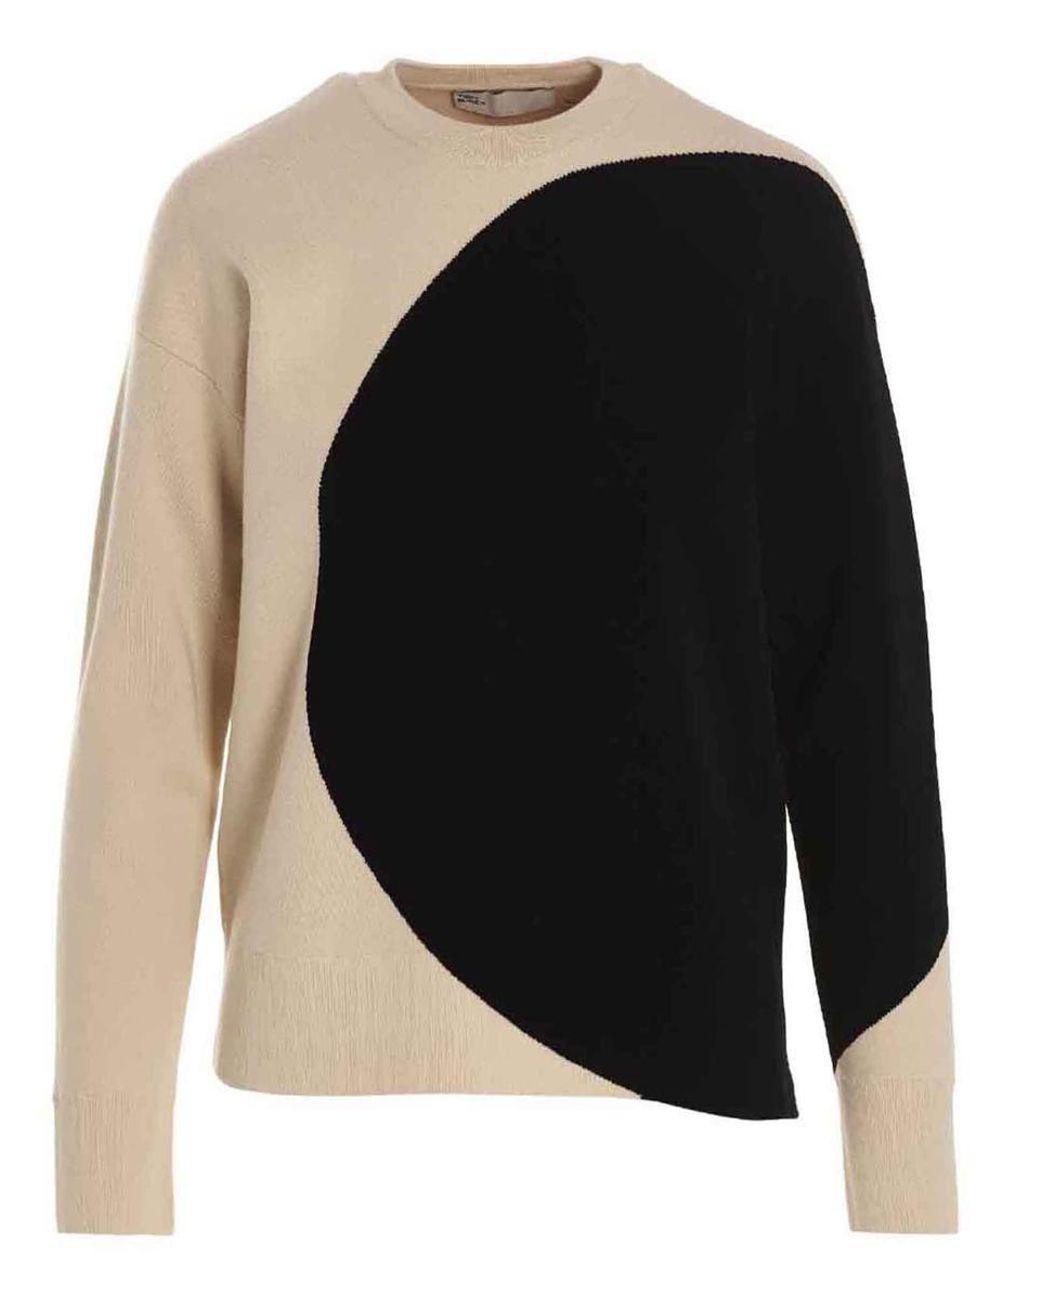 Tory Burch Colorblock Sweater in Black | Lyst